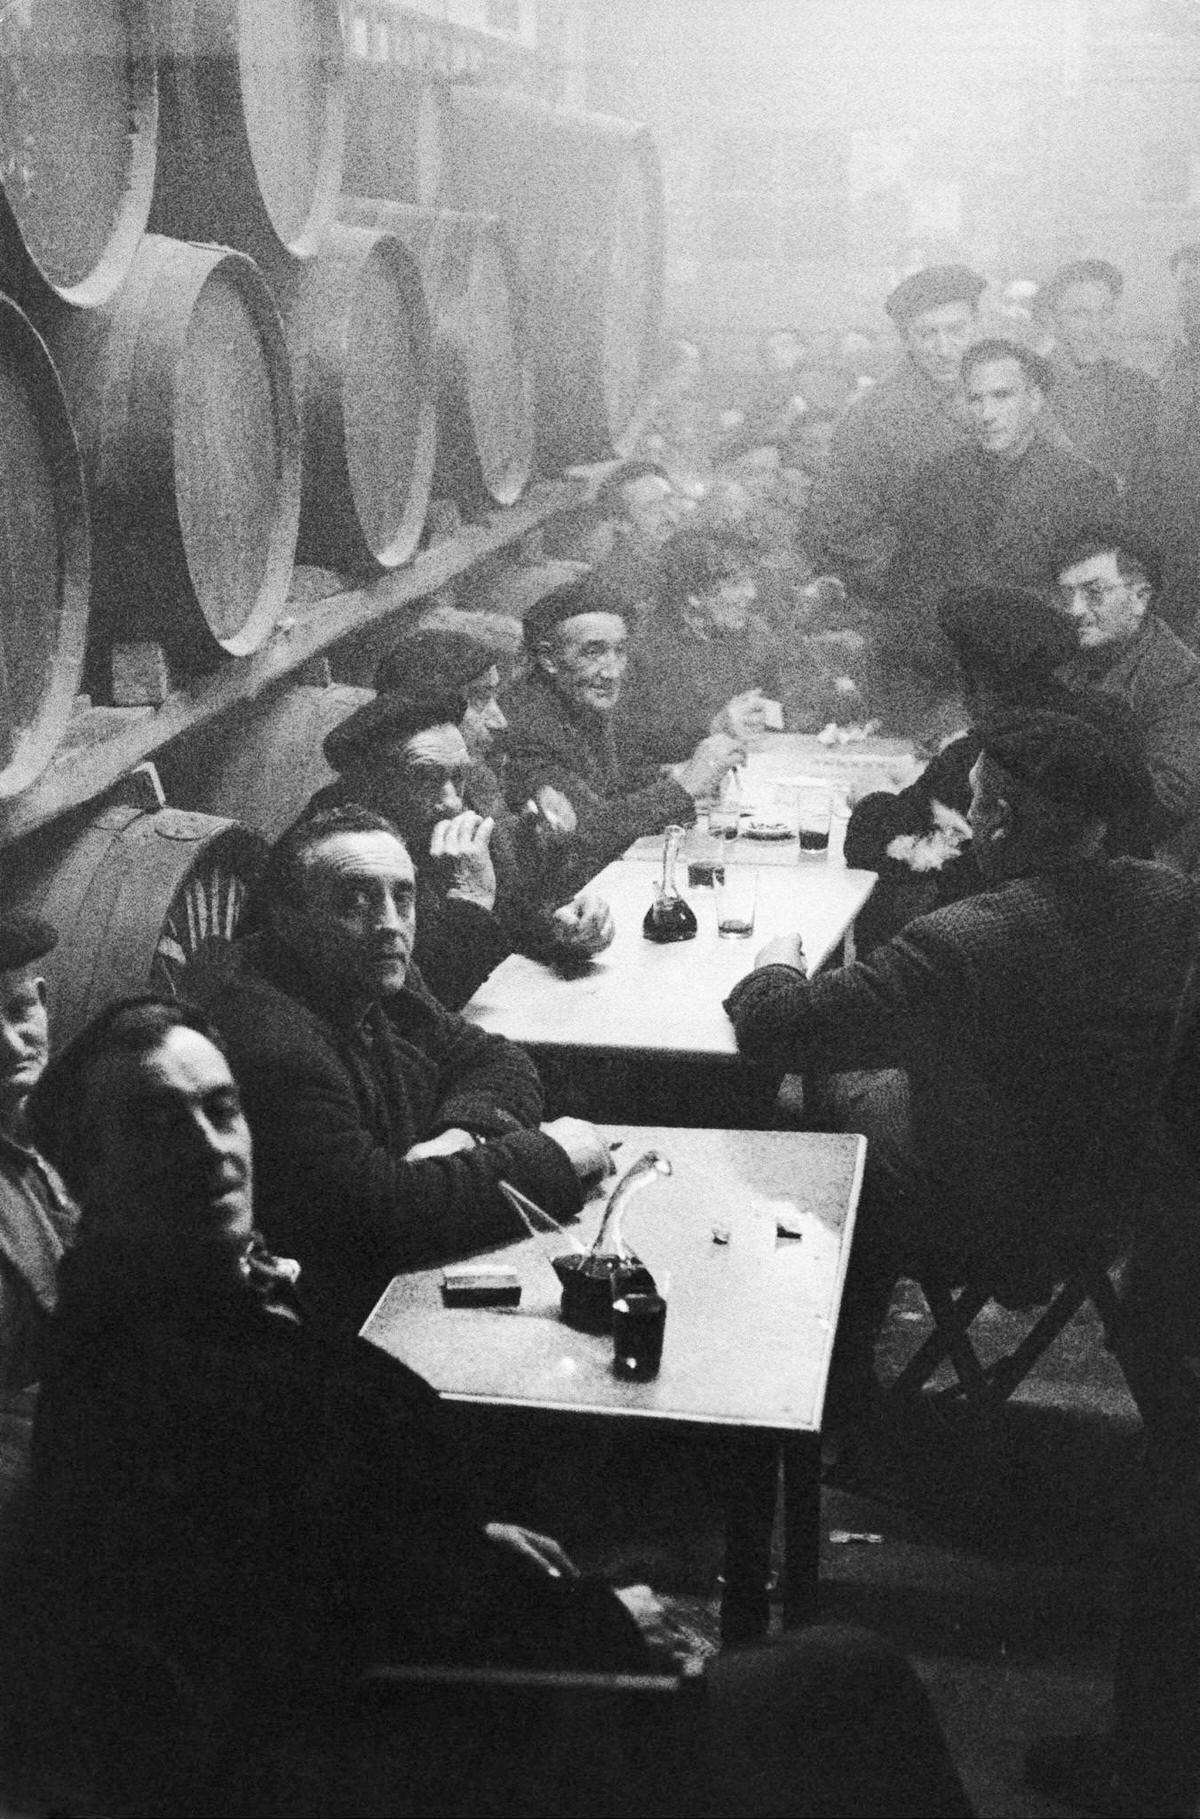 Inside the Wine Cellar, Les Halles, 1960s